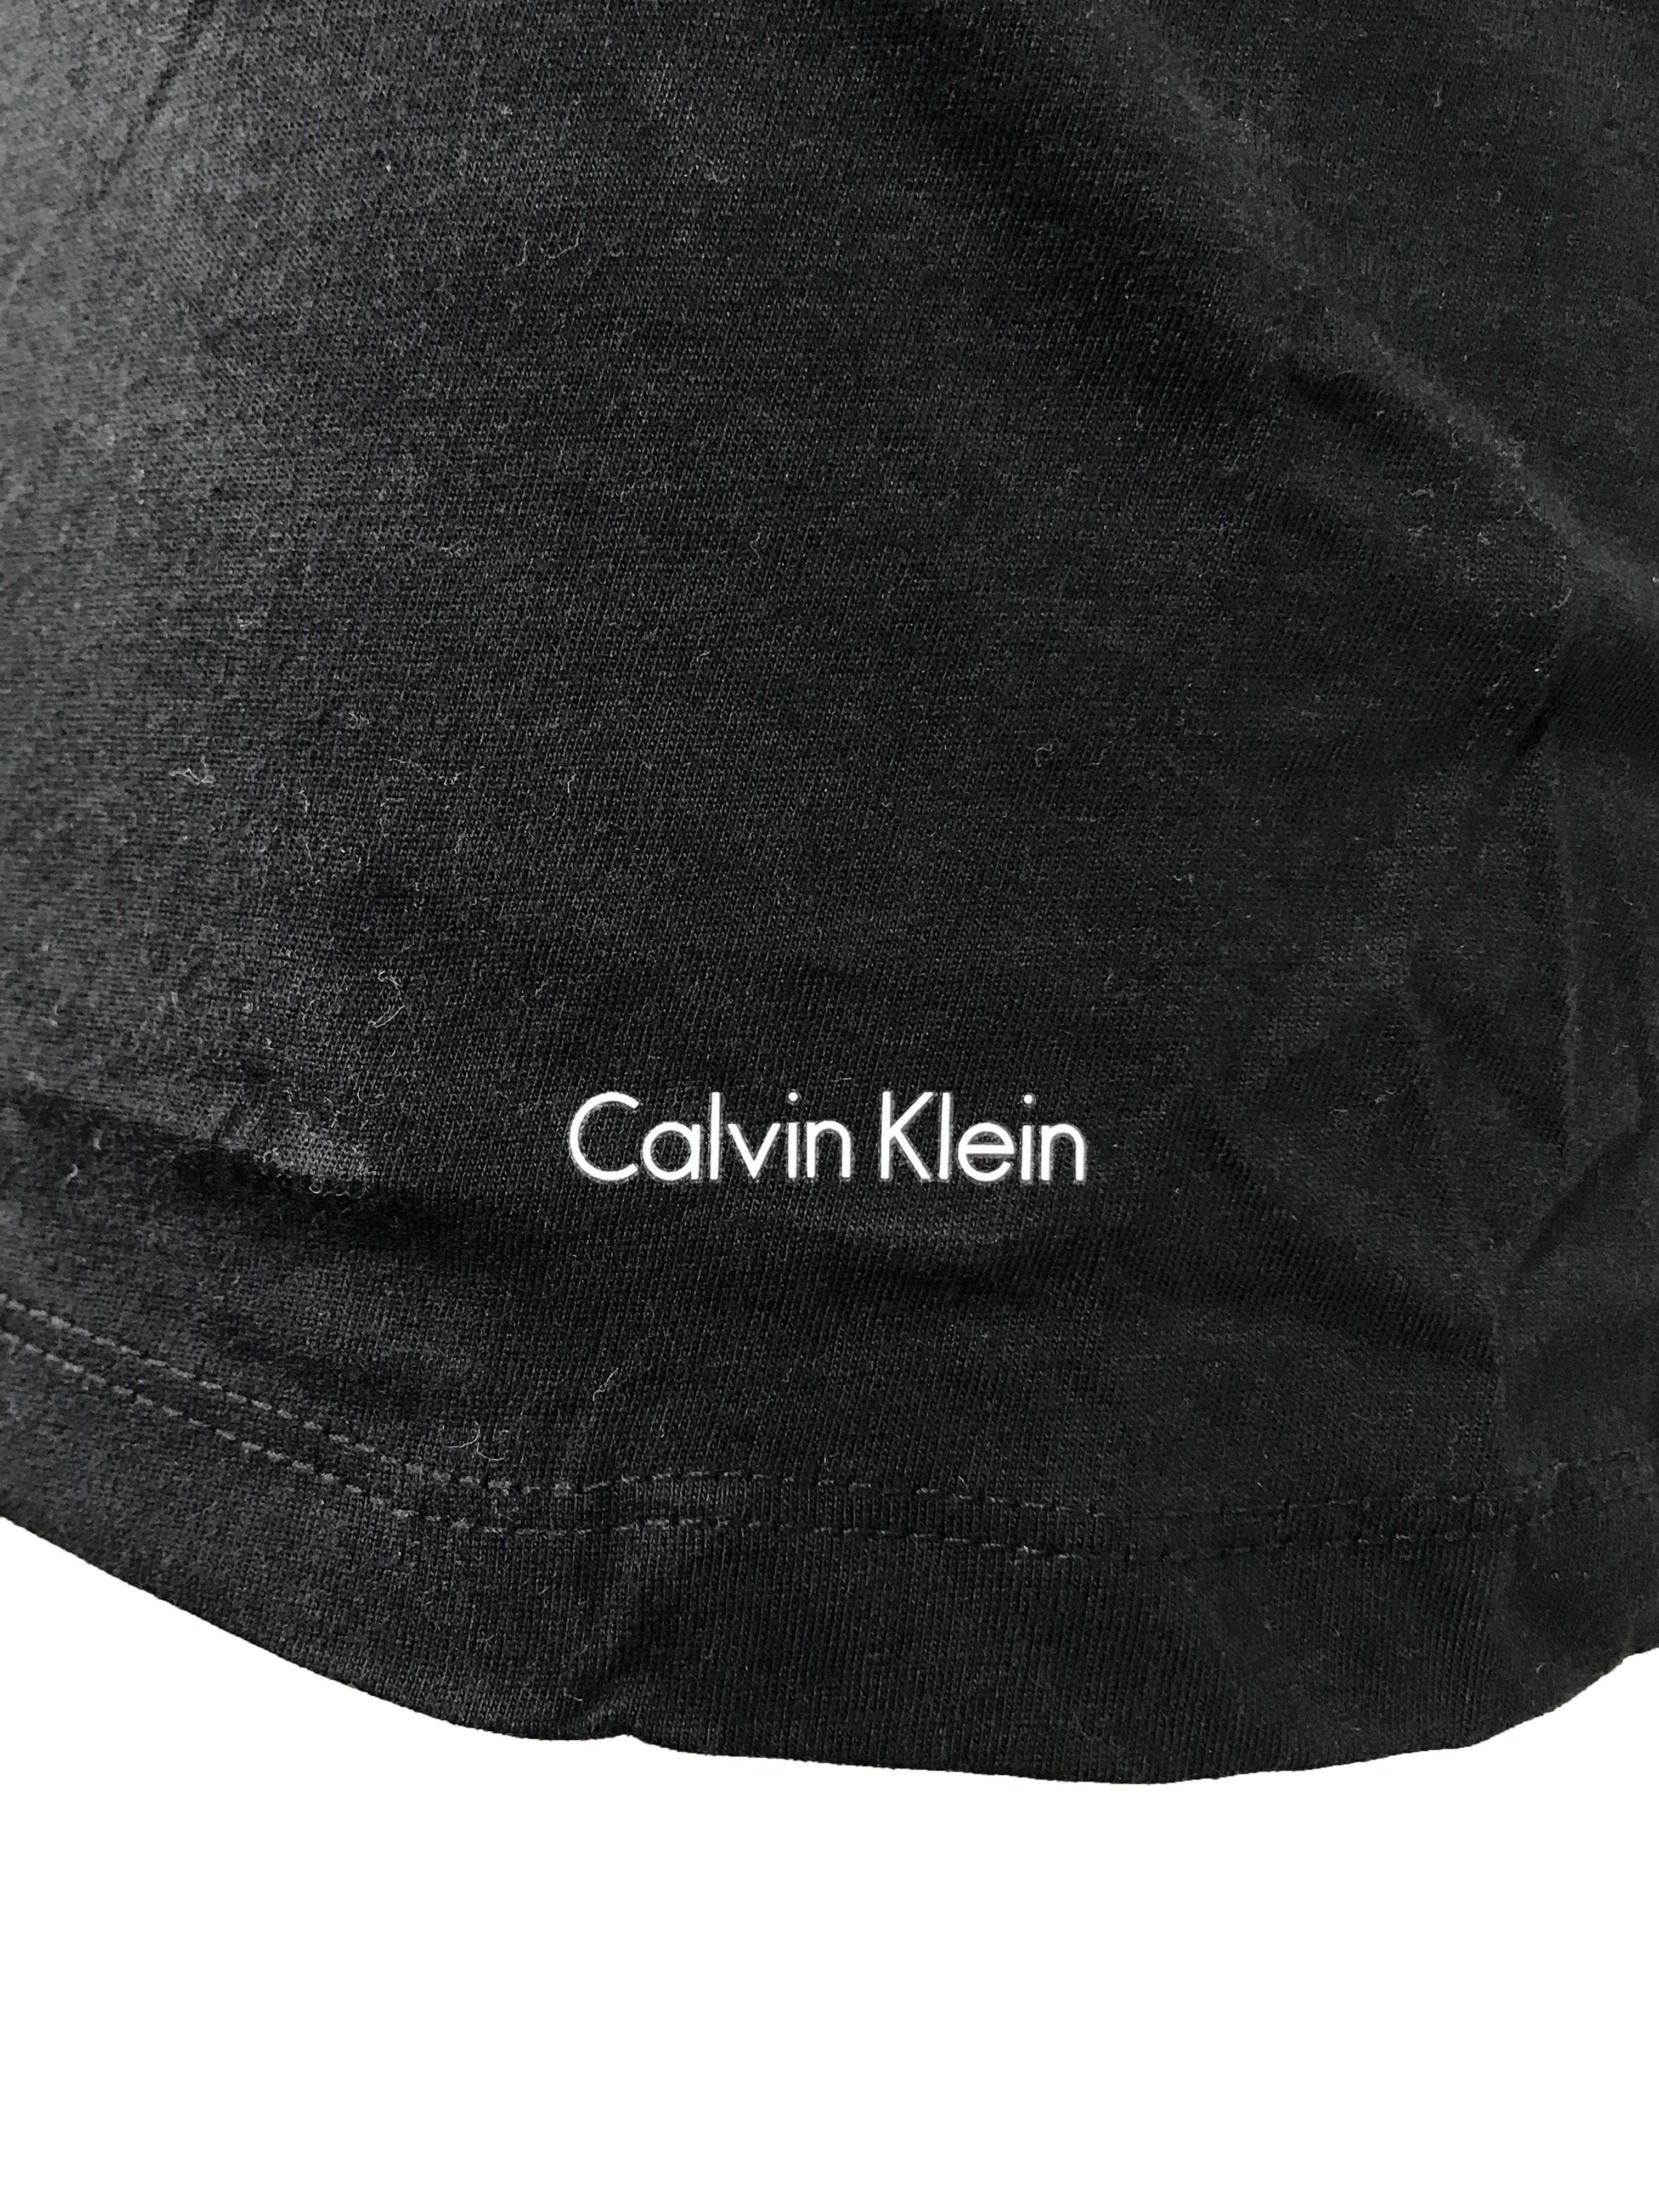 Calvin Klein Black V-Neck T-Shirt Men's Size M